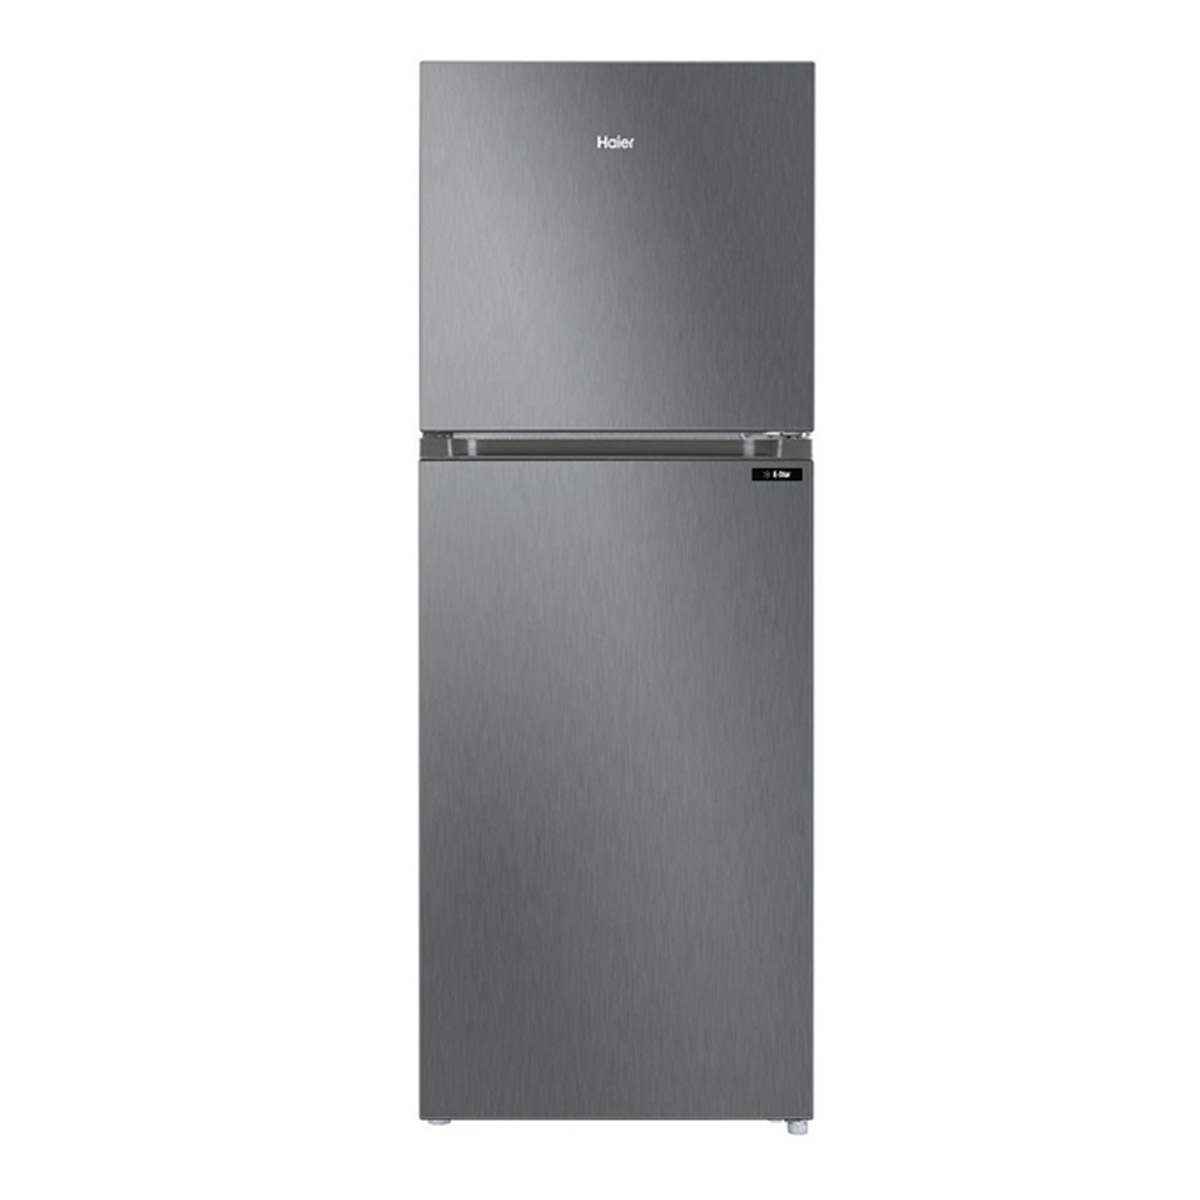 Haier Refrigerator 438 EBS Silver